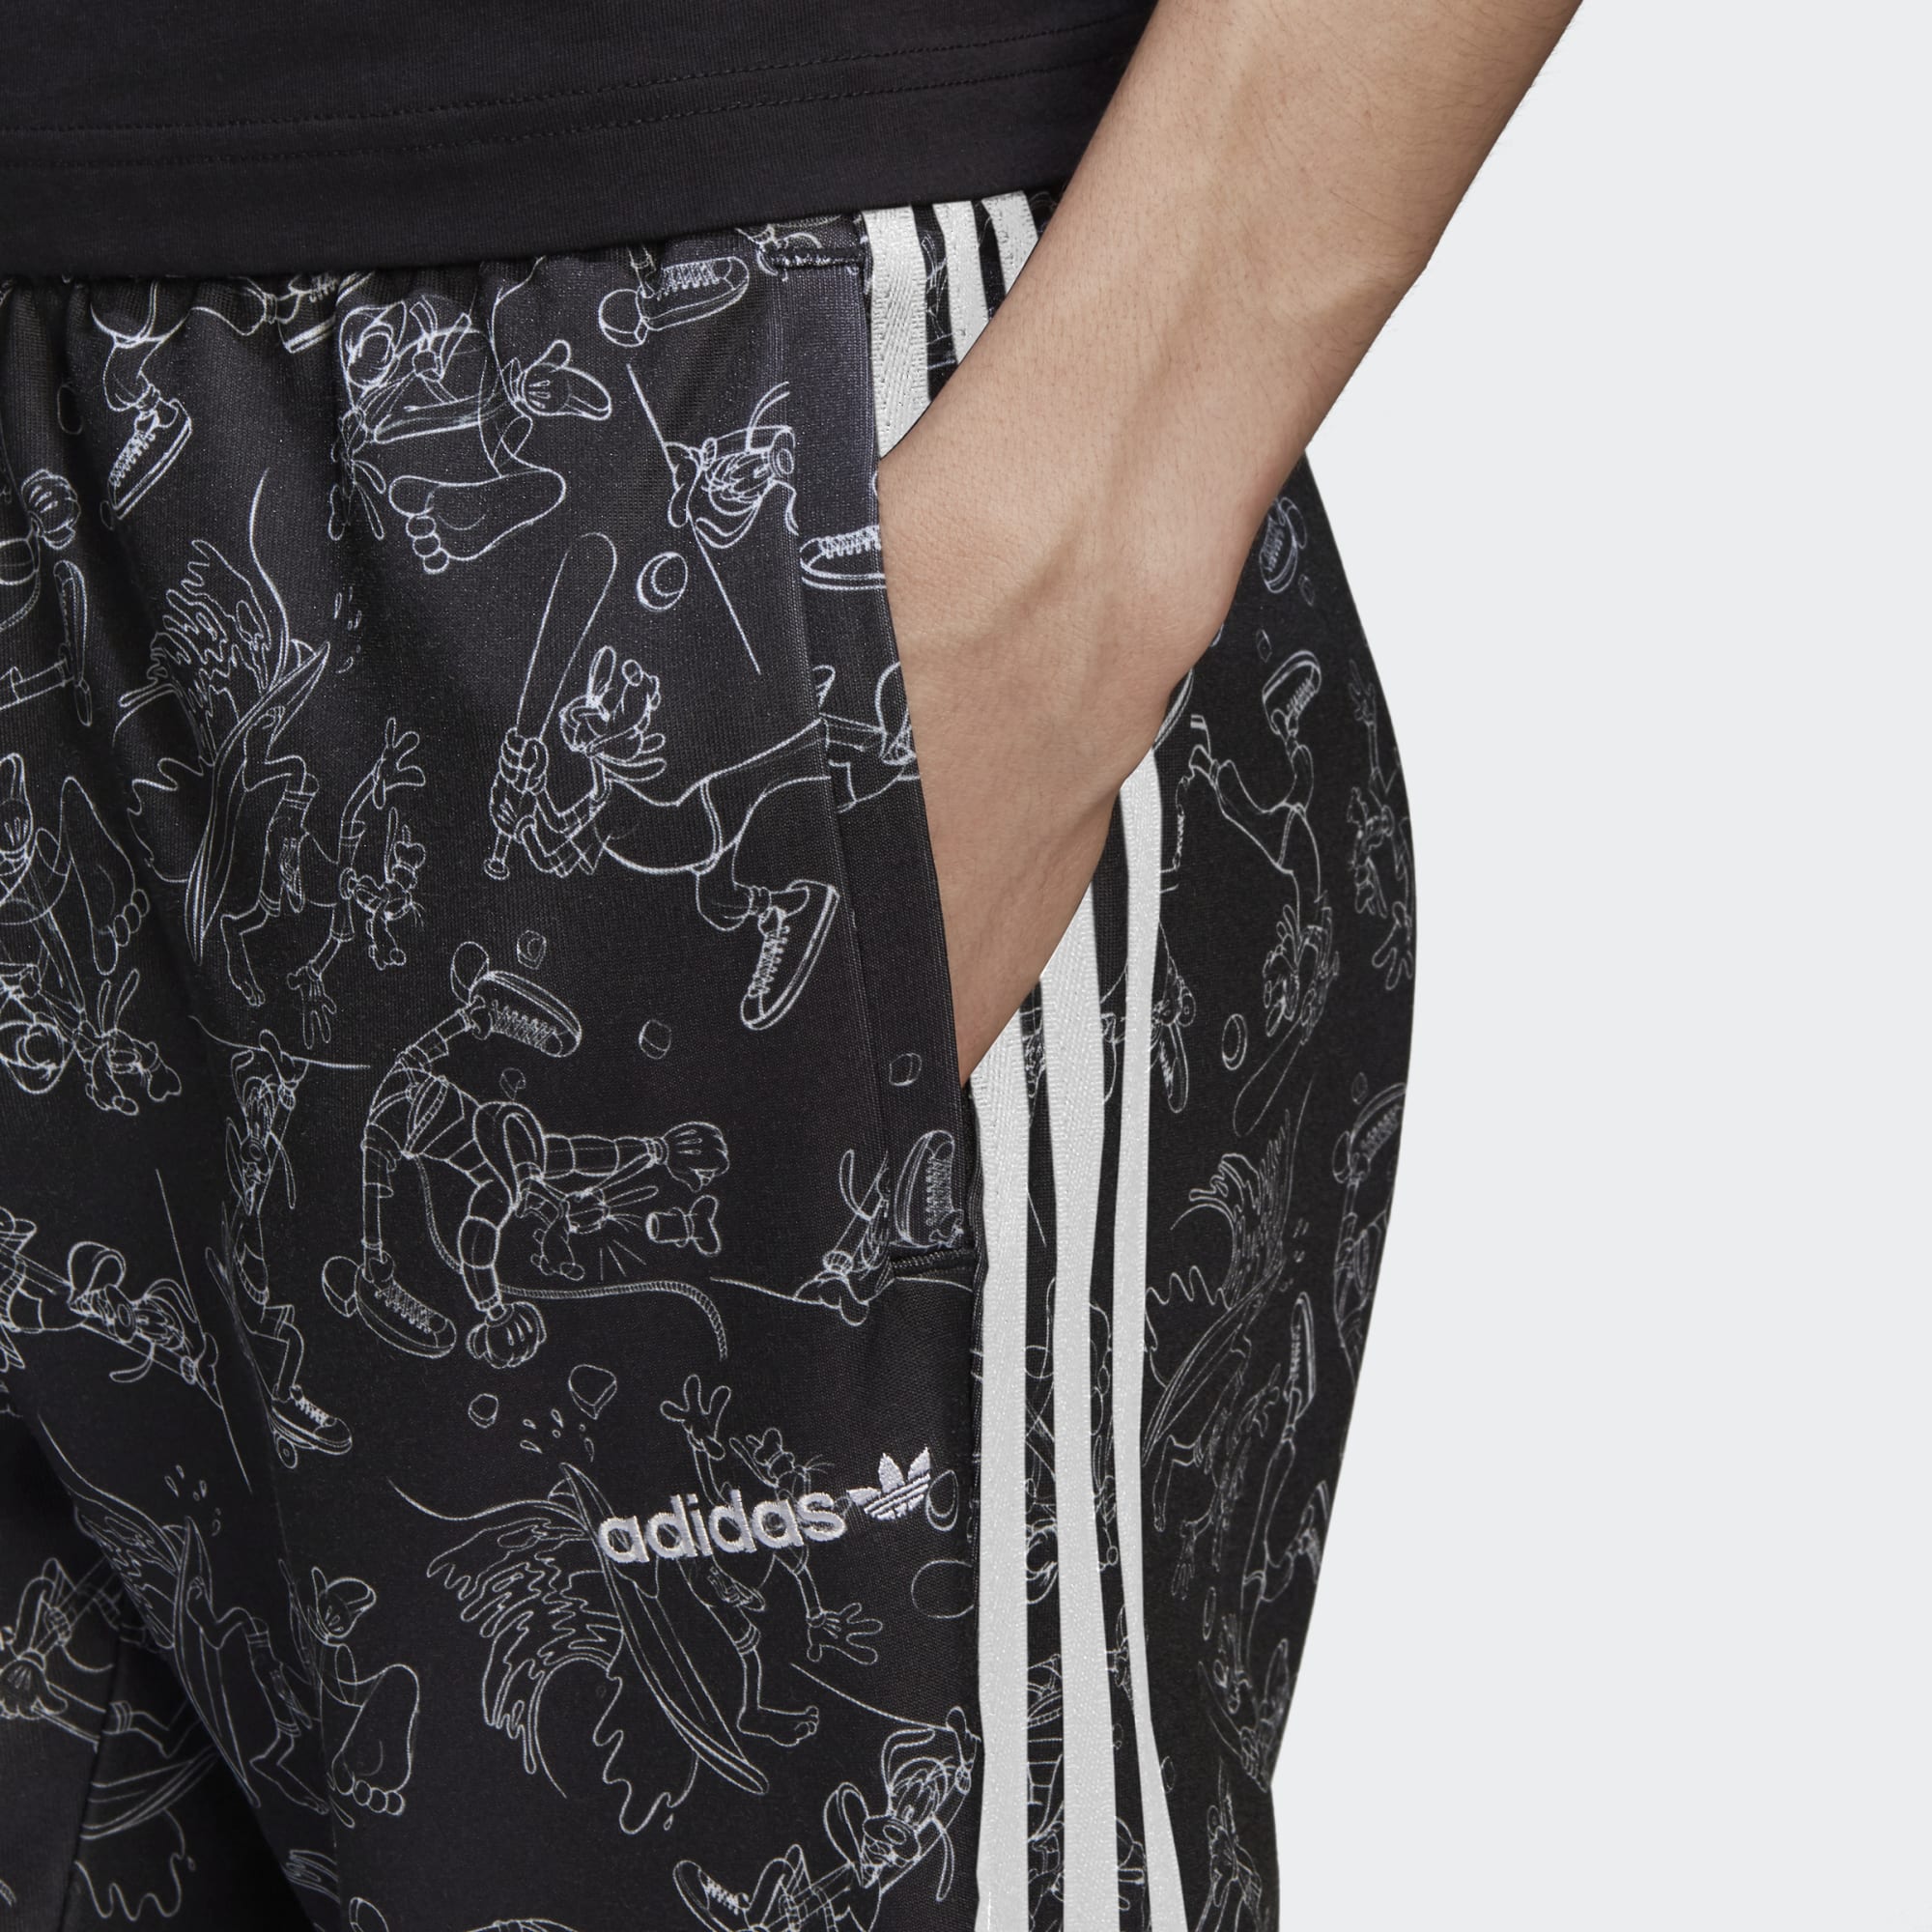 tradesports.co.uk Adidas Originals Men's Goofy Superstar Track Pants - Black